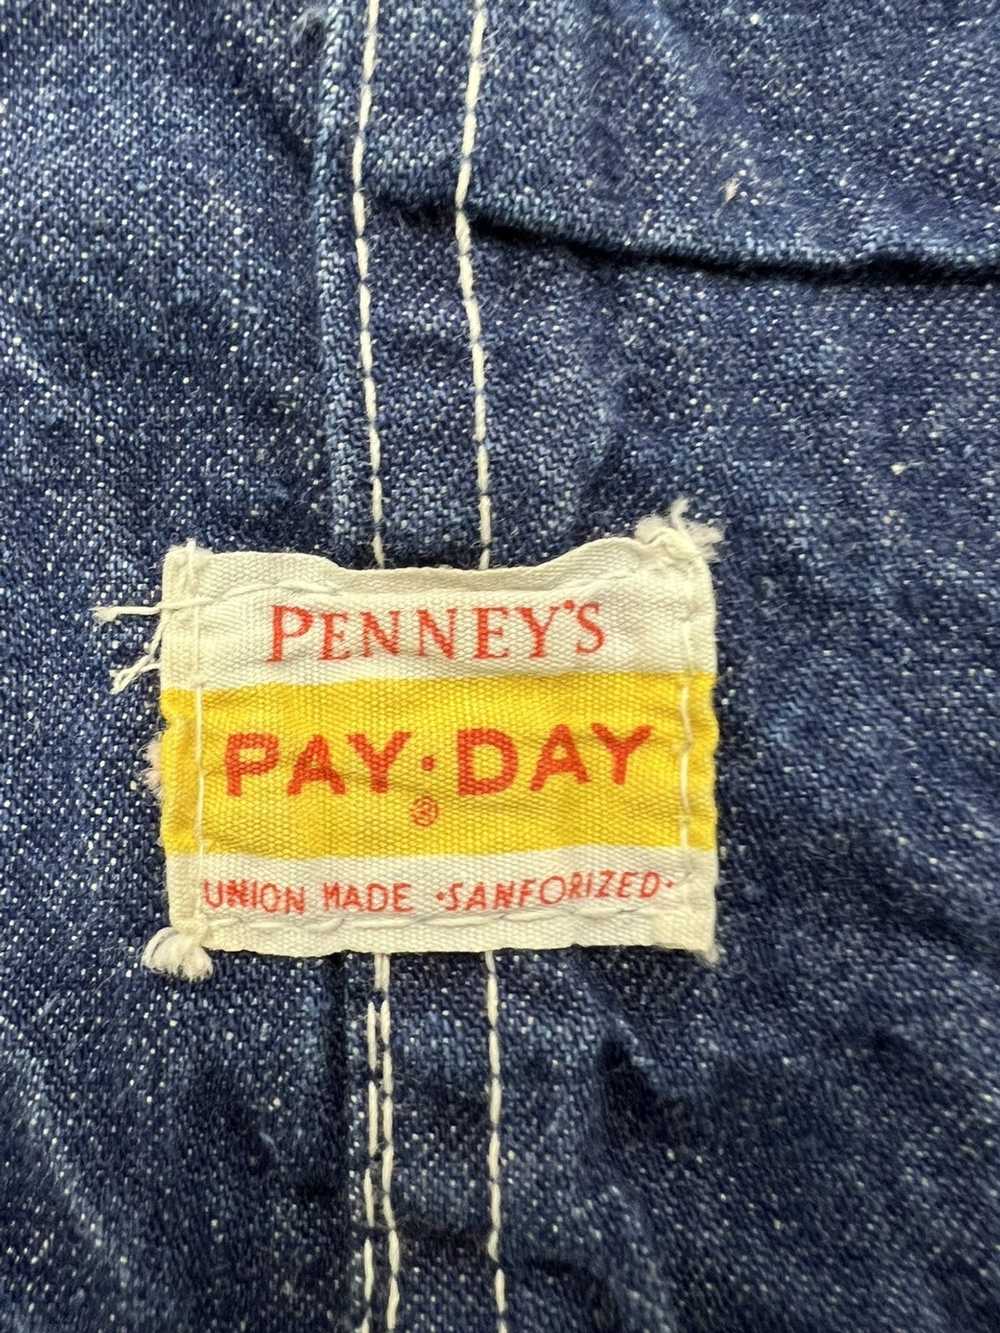 Union Made VTG Penney’s PayDay Union Made Sanfori… - image 2